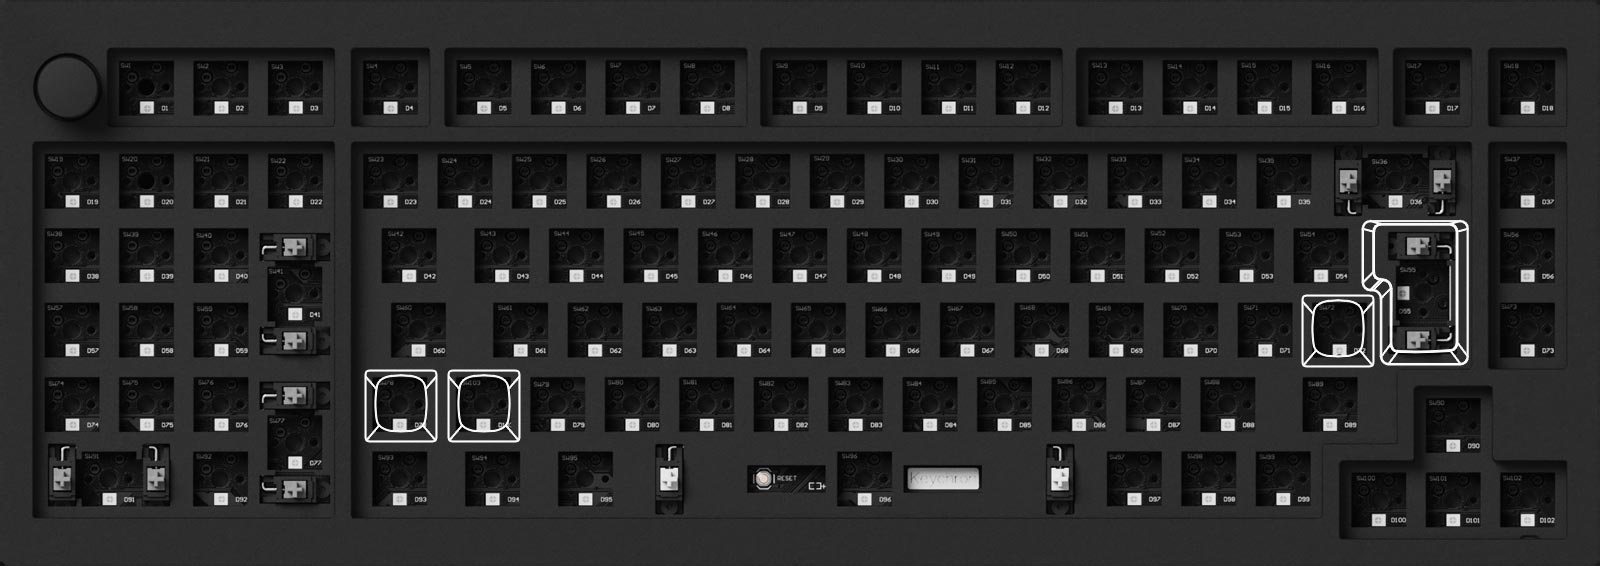 ISO layout of Keychron Q12 Compact 96% Layout Custom Mechanical Keyboard